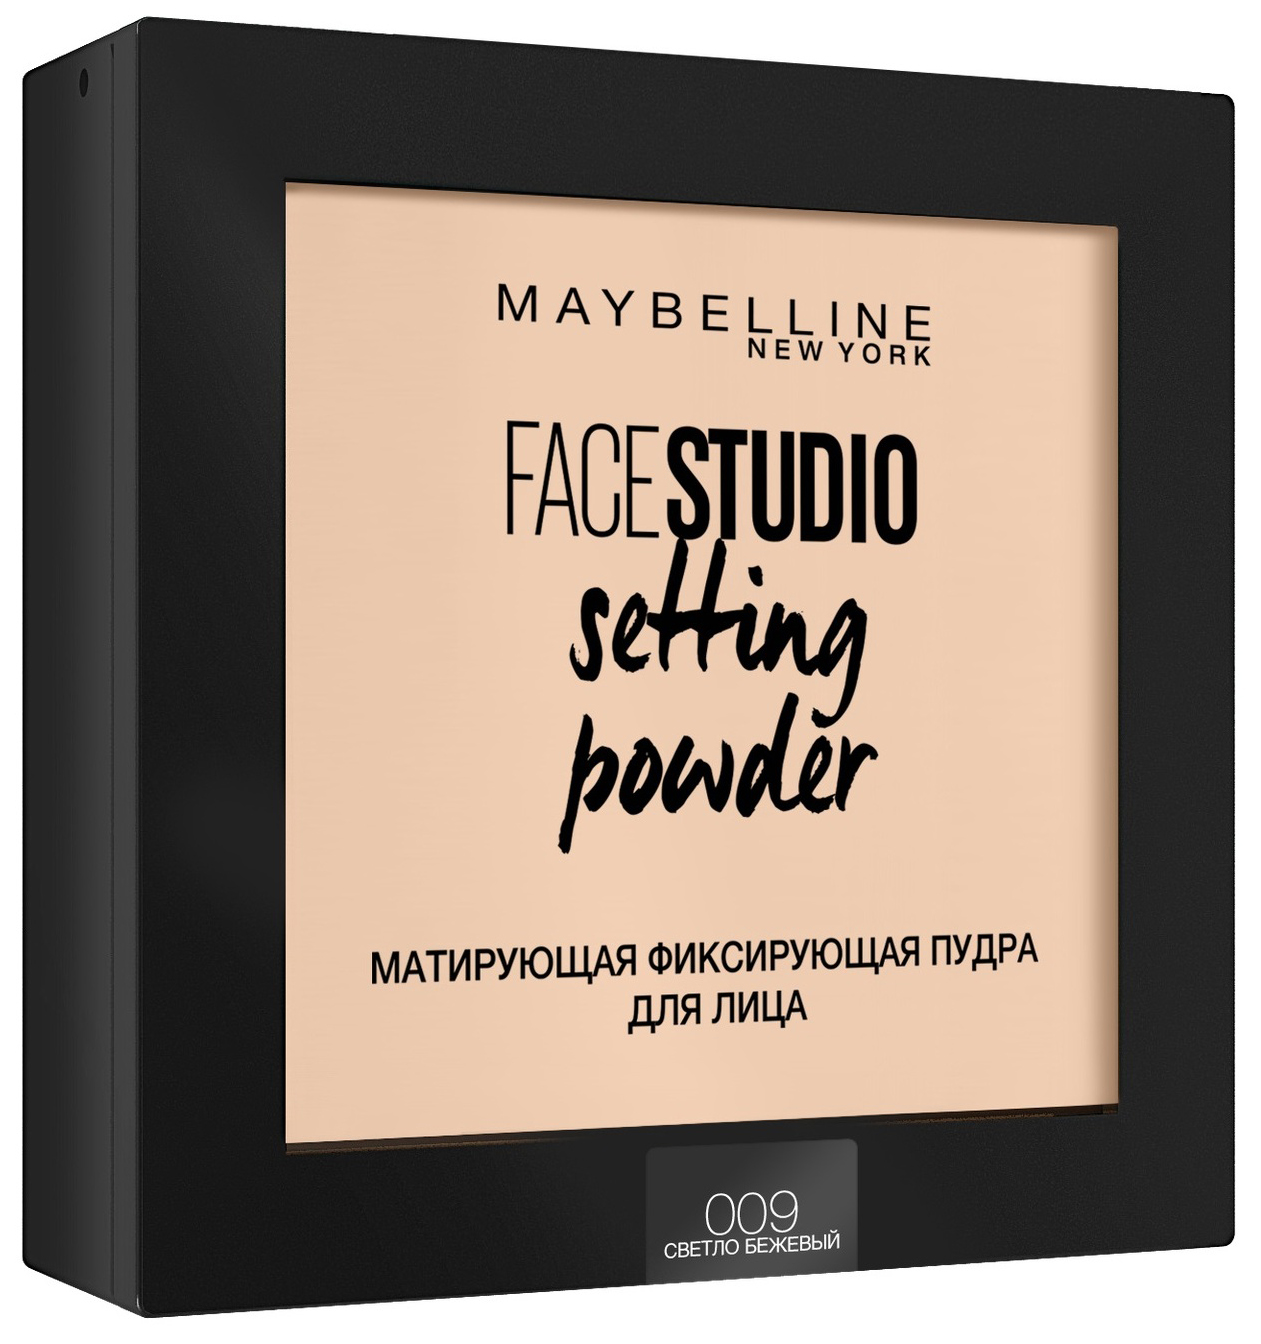 Пудра Maybelline Face Studio Setting Powder 009 Светло-бежевый 9 г хайлайтер maybelline new york face studio shimmer hightlight 009 bronze 9 г